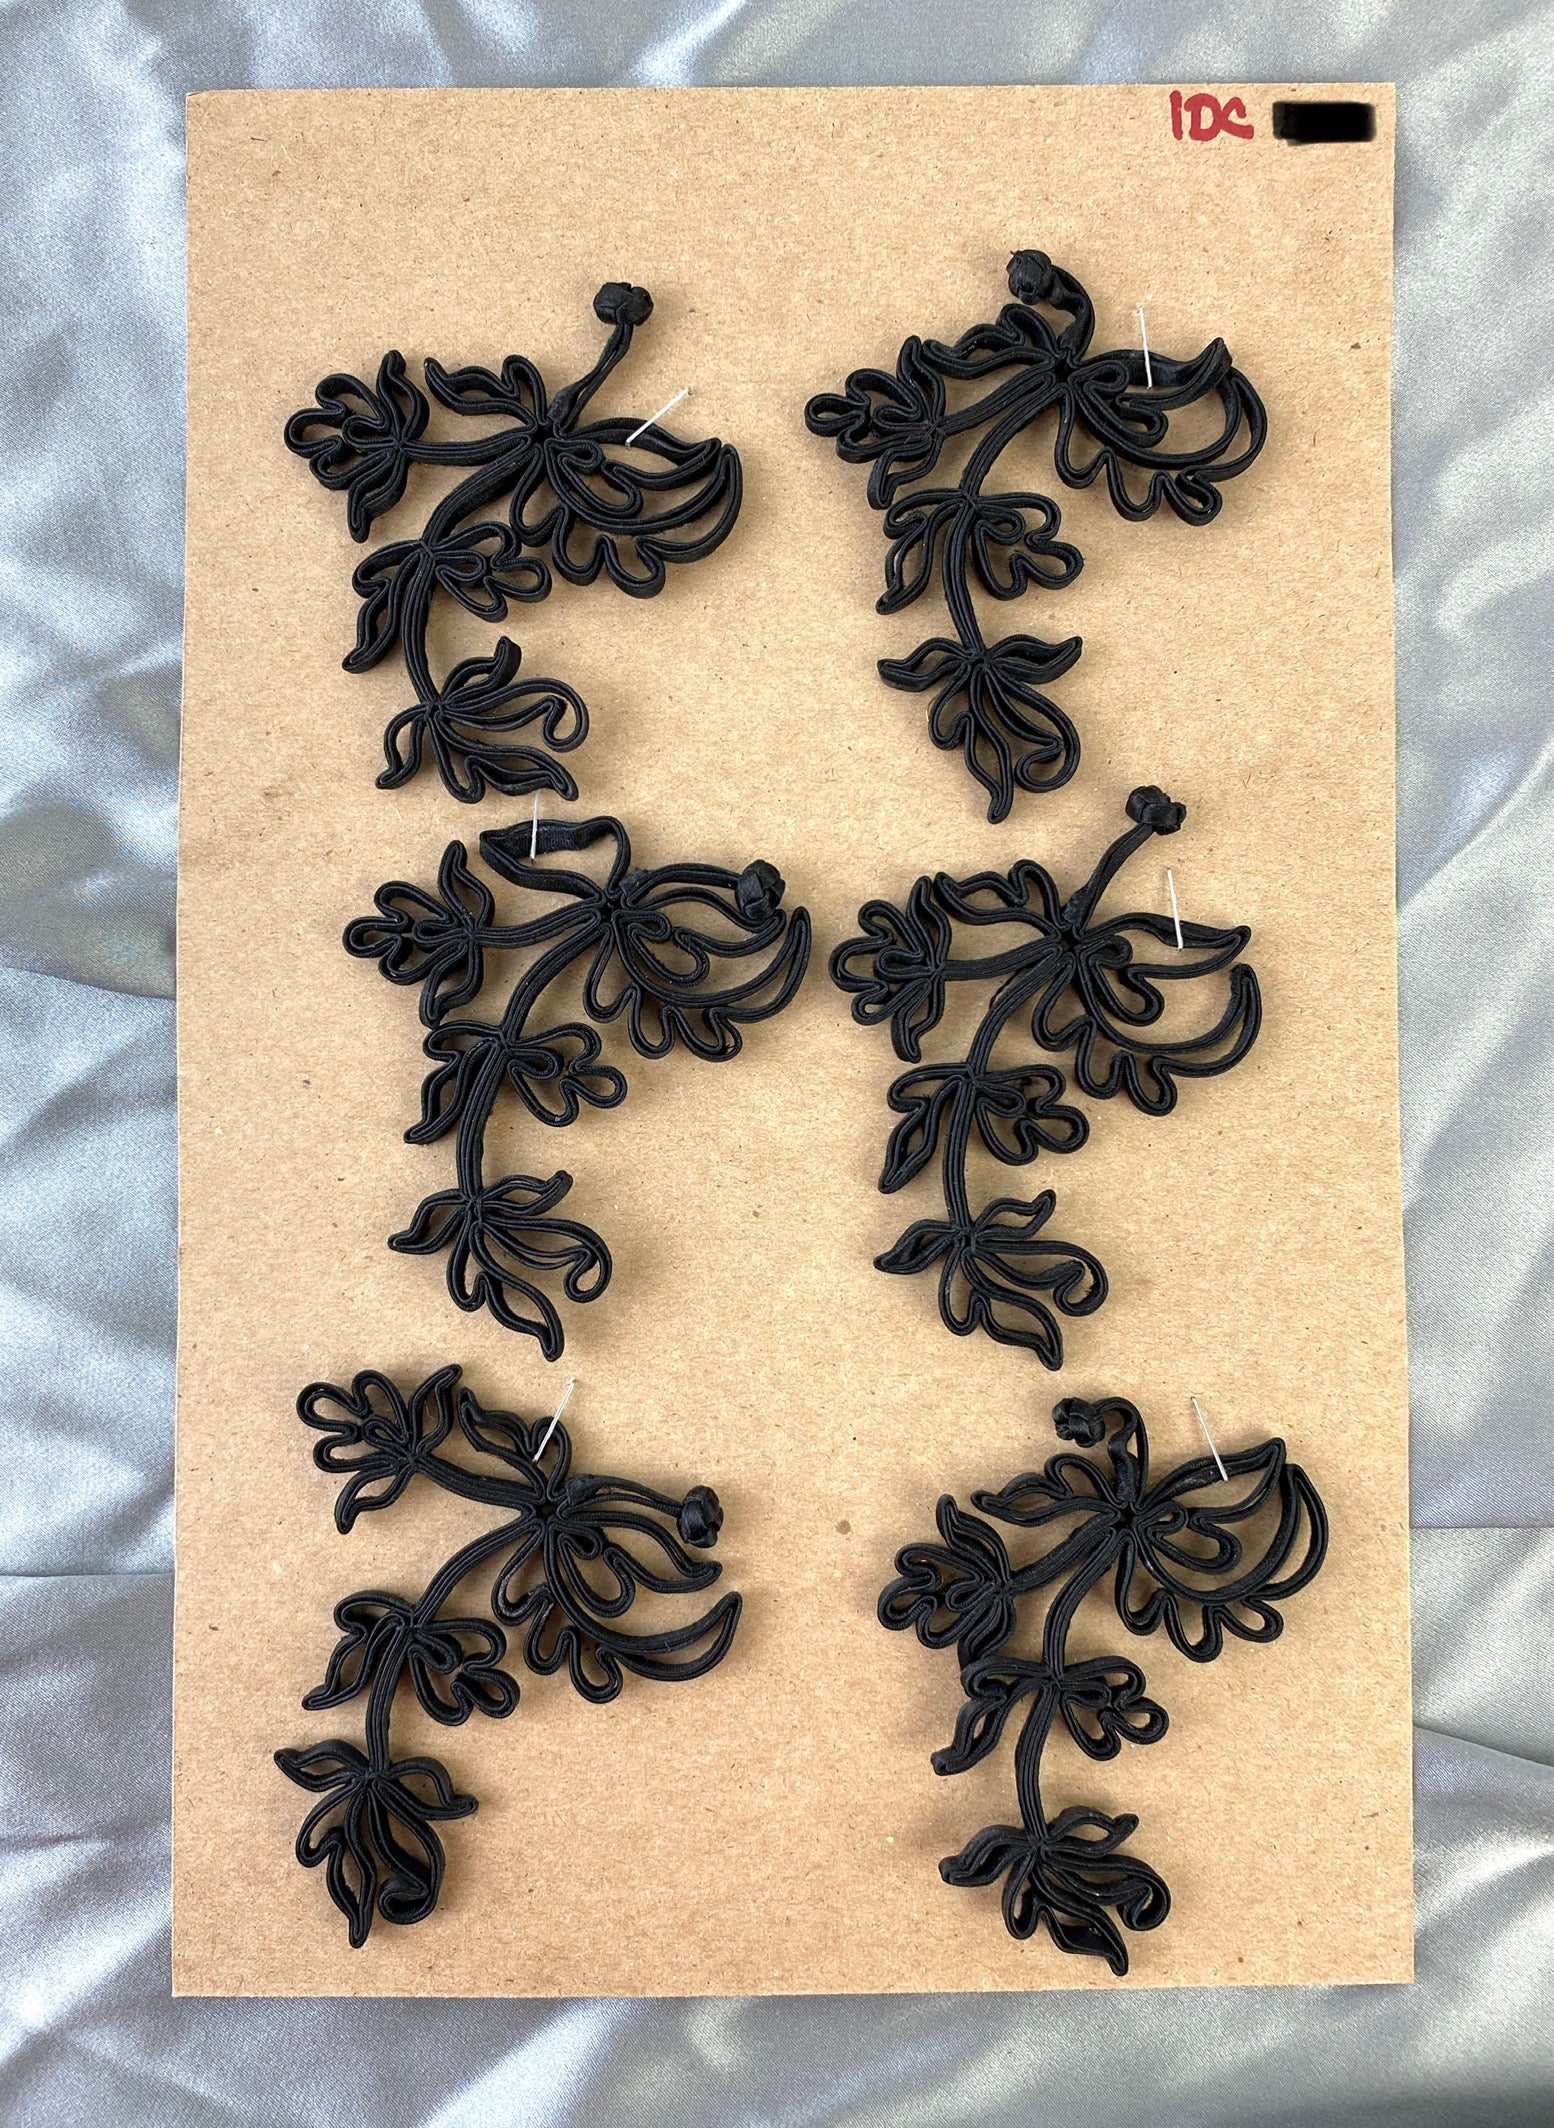 Antique Victorian Black Silk Wire Appliqués, 6 Pieces